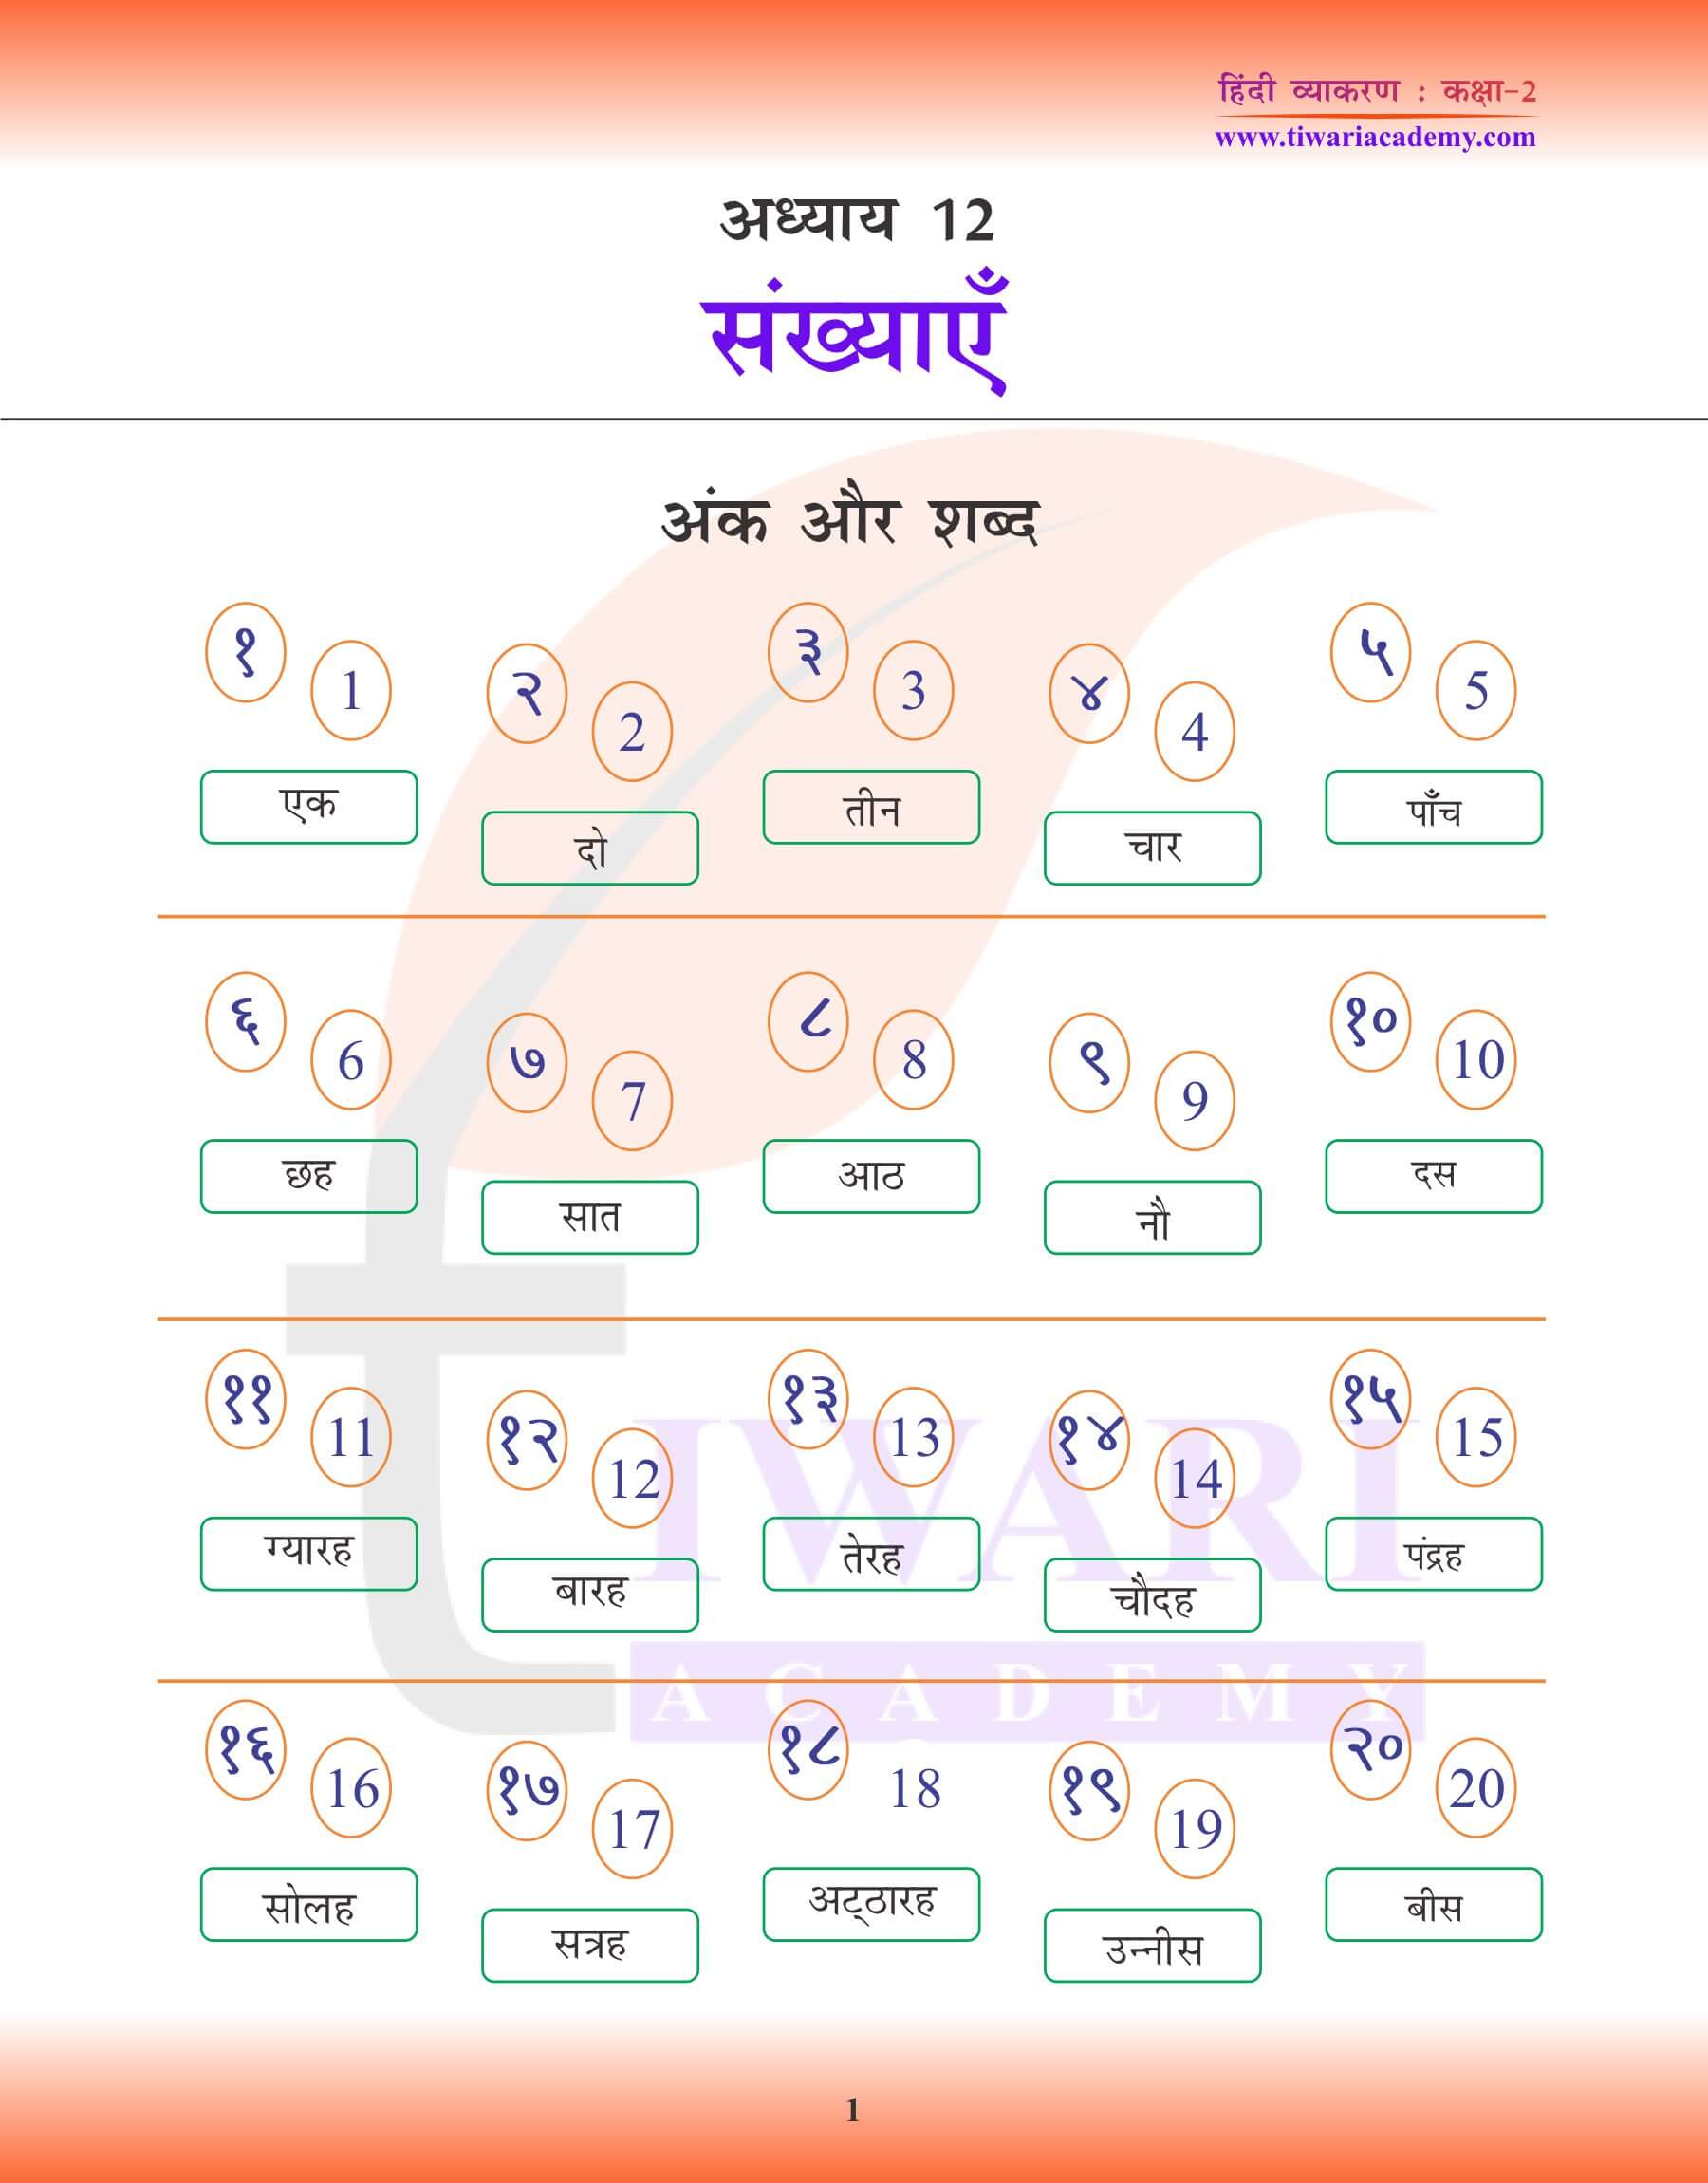 कक्षा 2 हिंदी व्याकरण पाठ 12 संख्याएँ